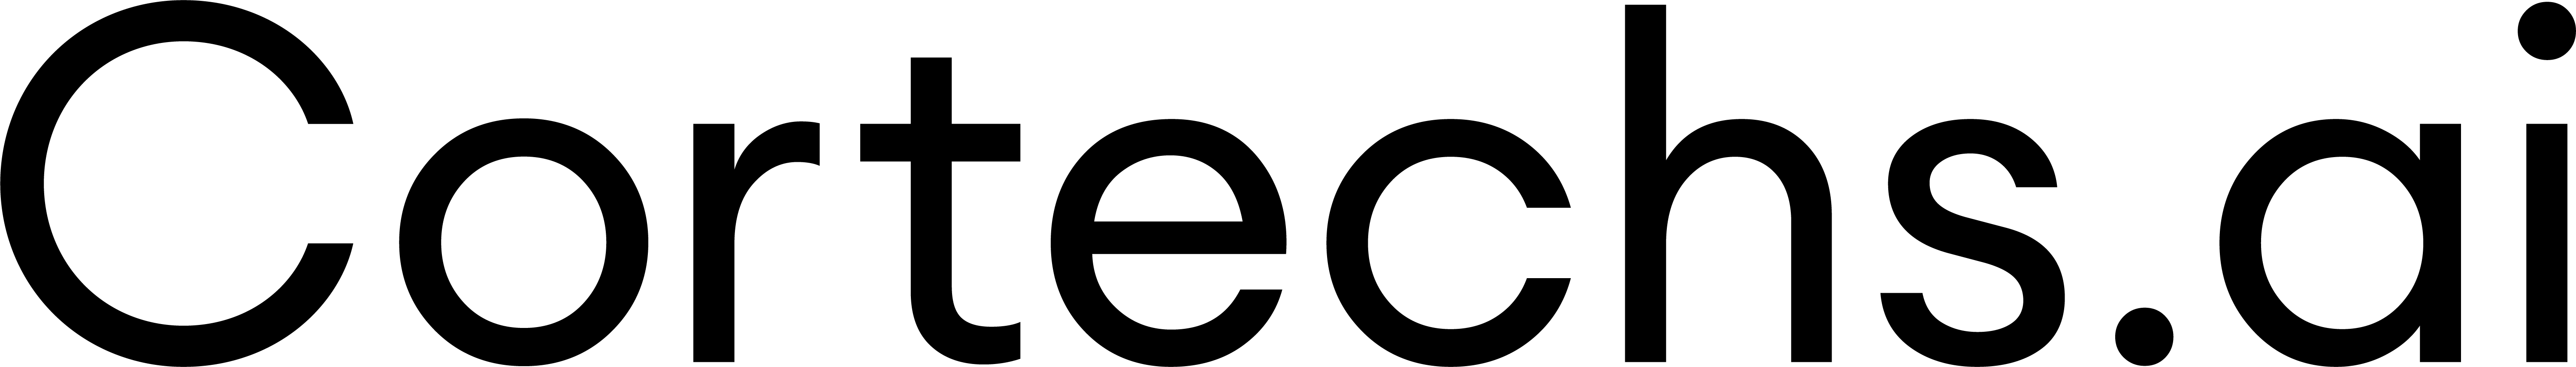 Cortechs.ai Logo Black RGB